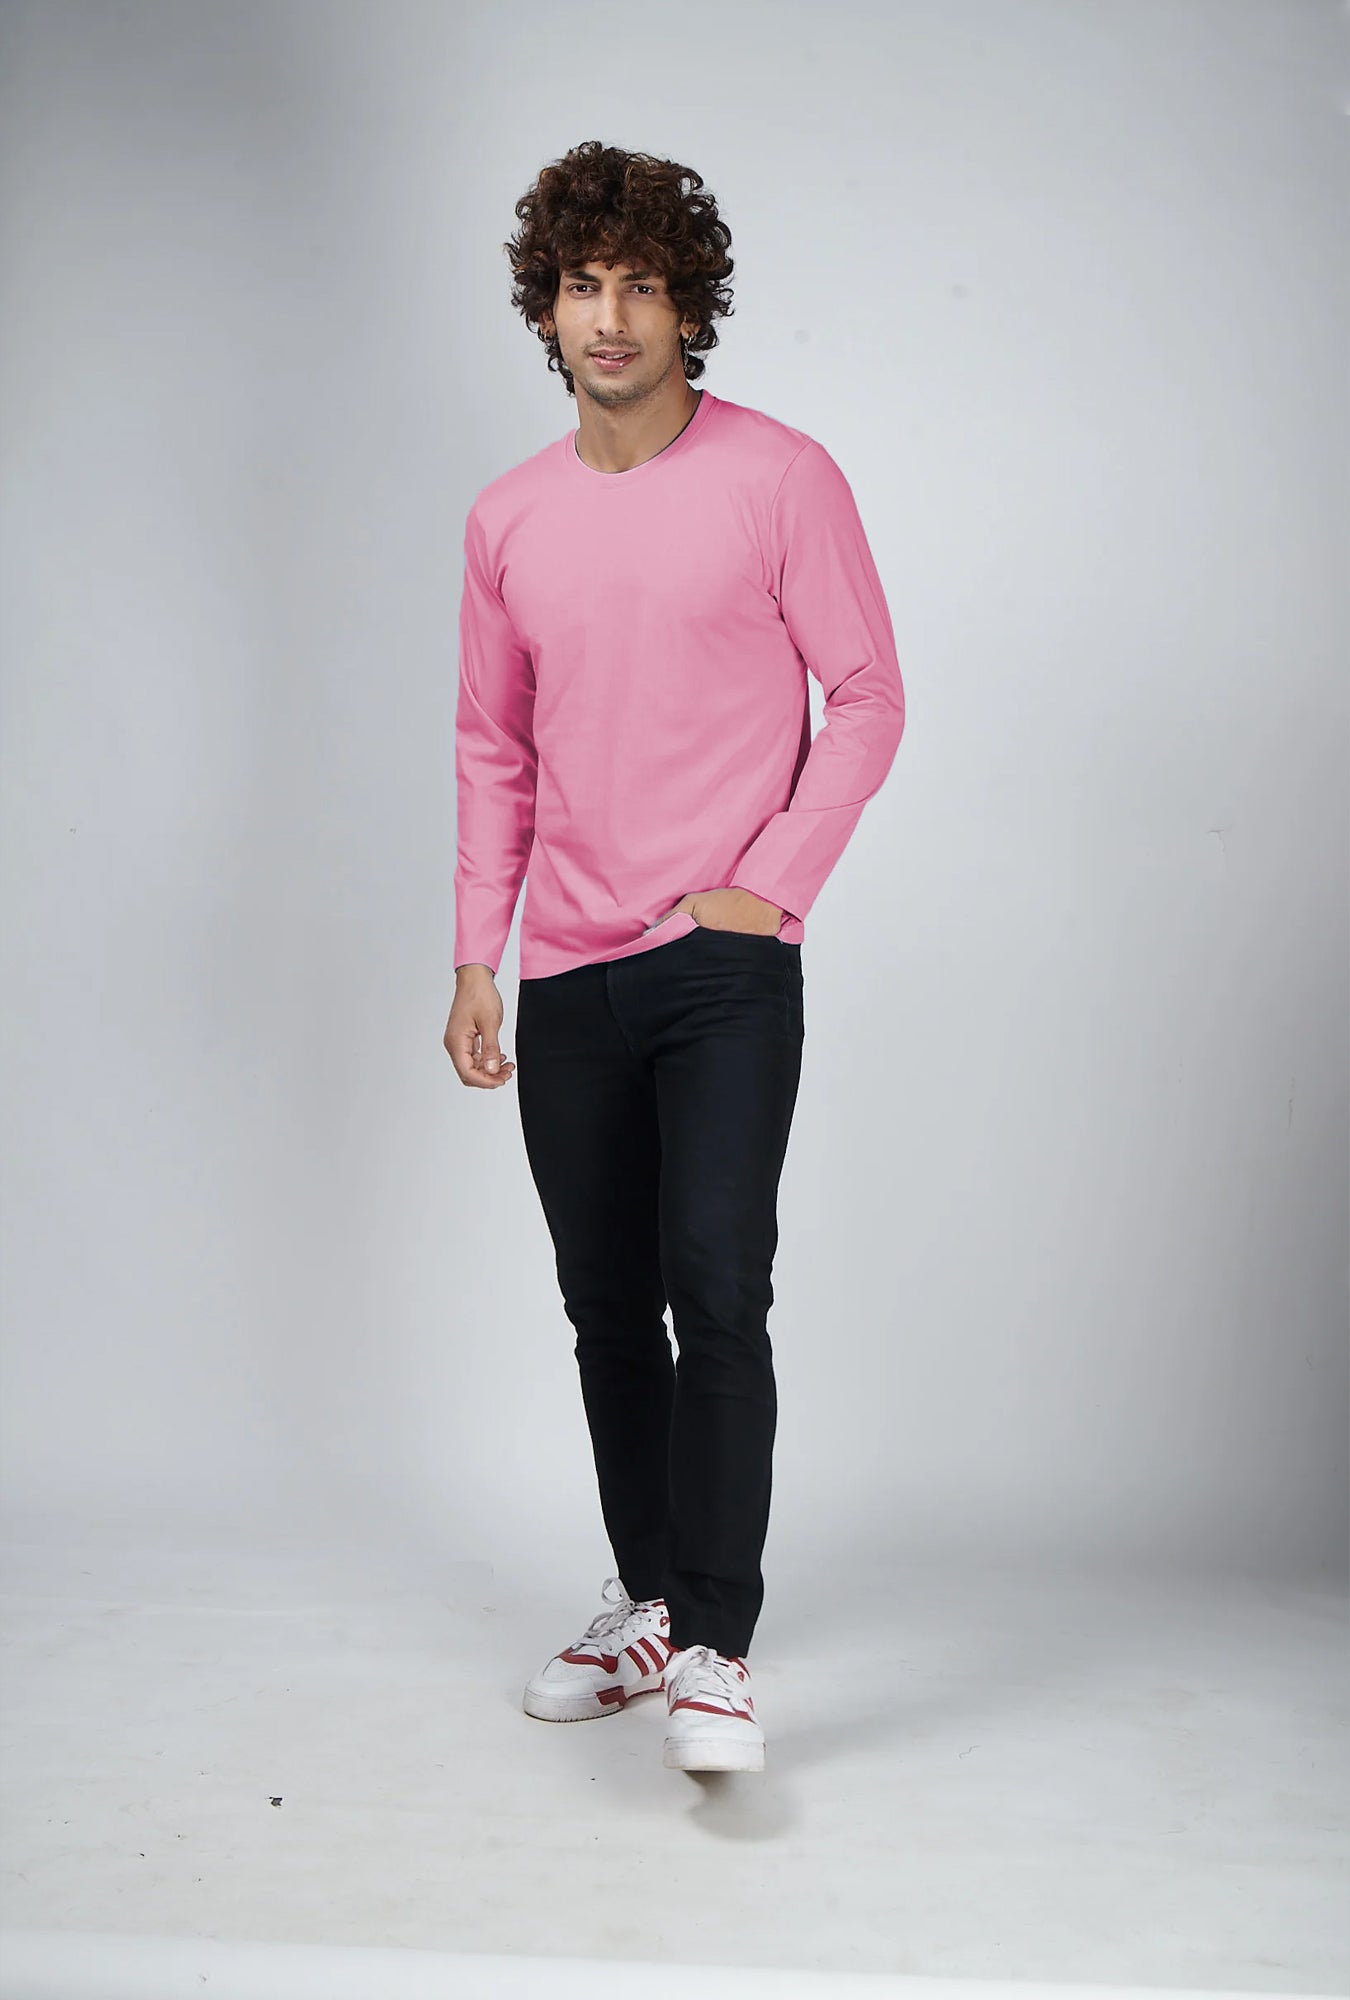 Basic Pink Full Sleeves T-Shirt